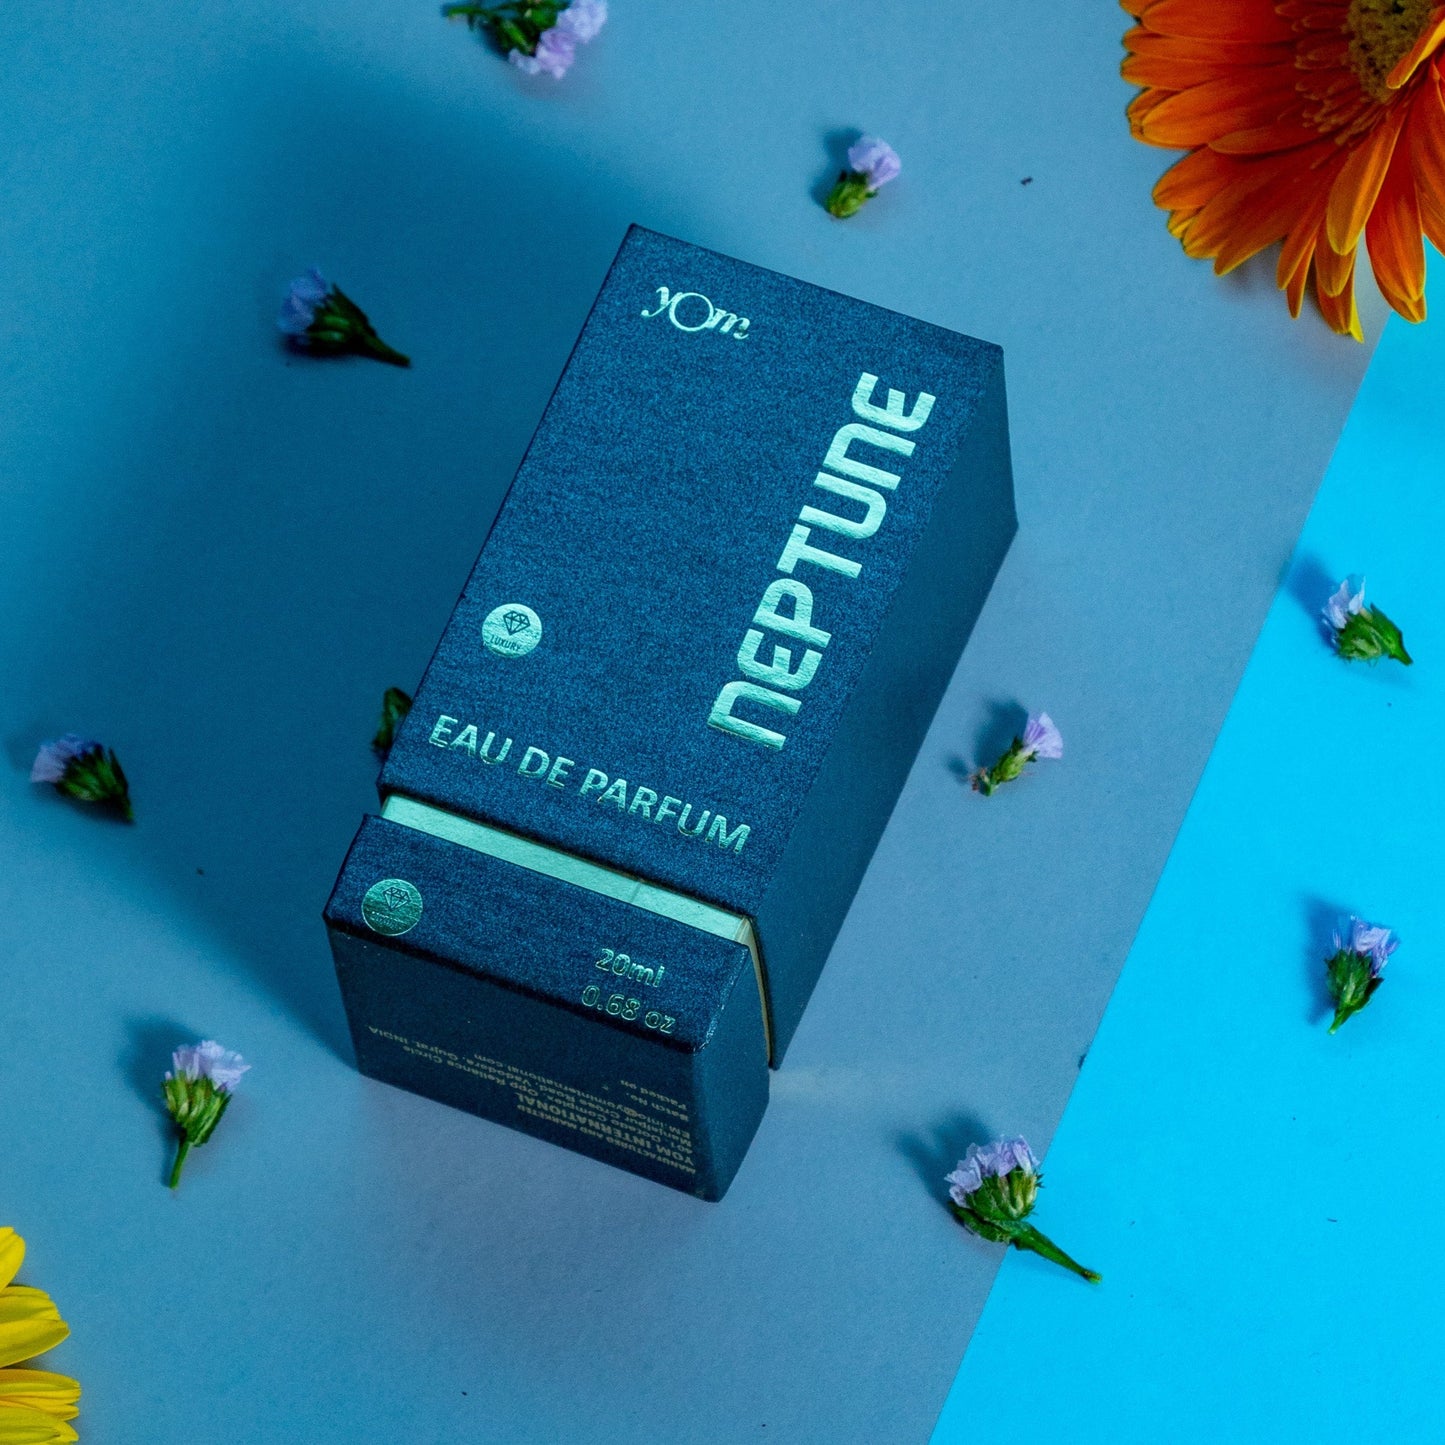 PERFUME - YOM Perfume Neptune for Unisex